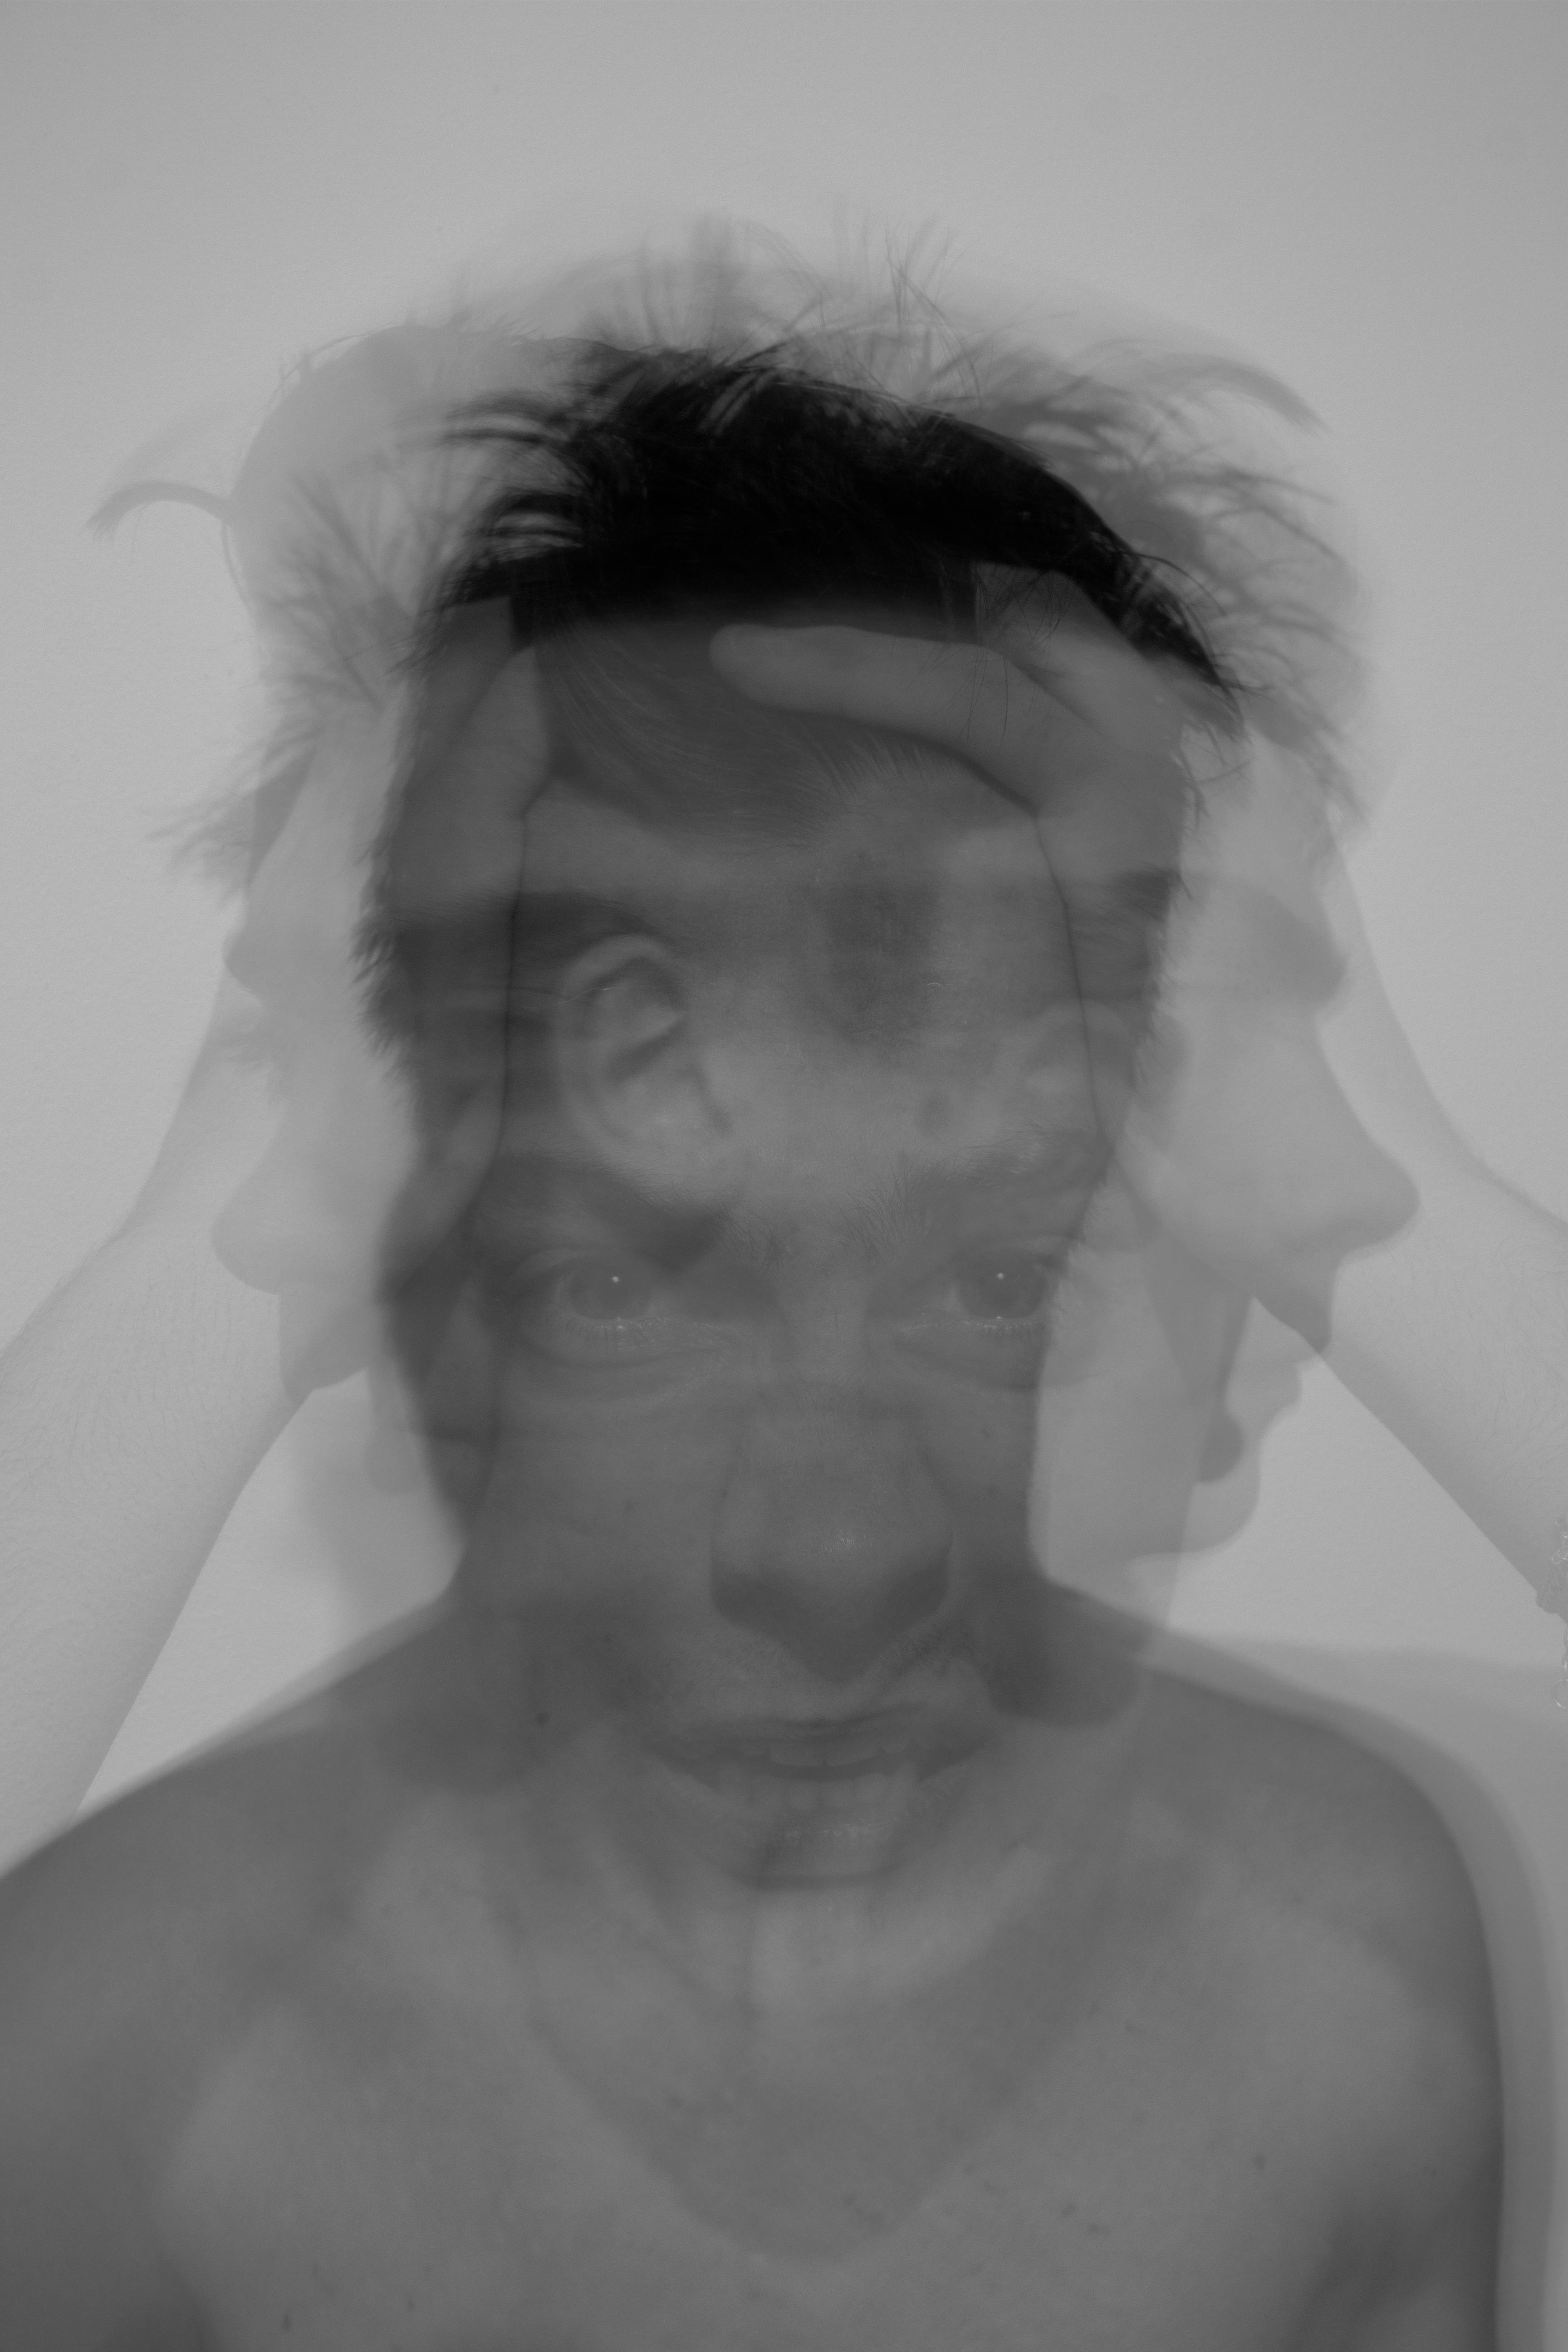 blurred portrait of a man